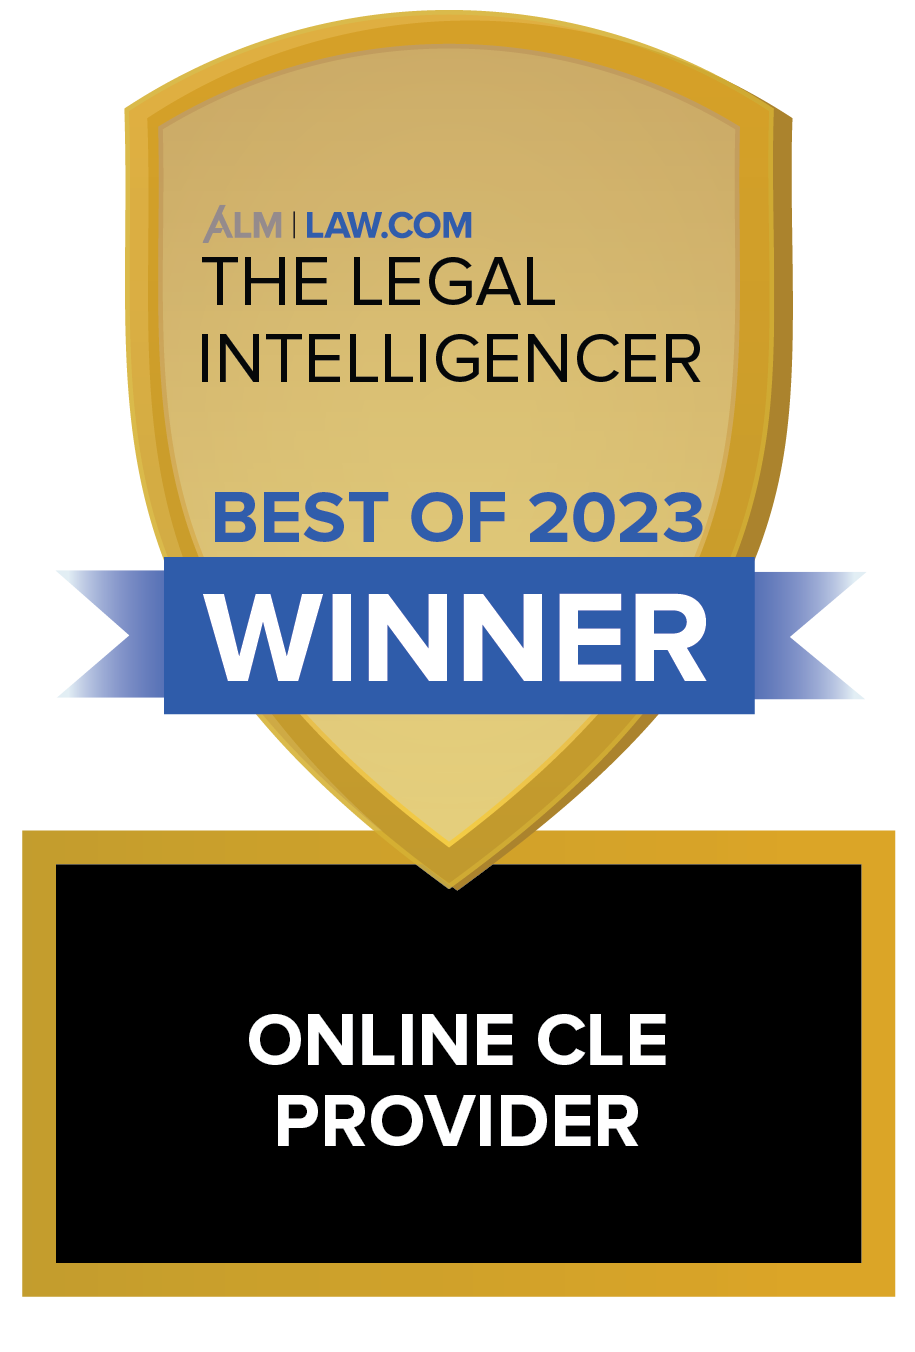 The Legal Intelligencer Best of 2023: WINNER - Best Online CLE Provider